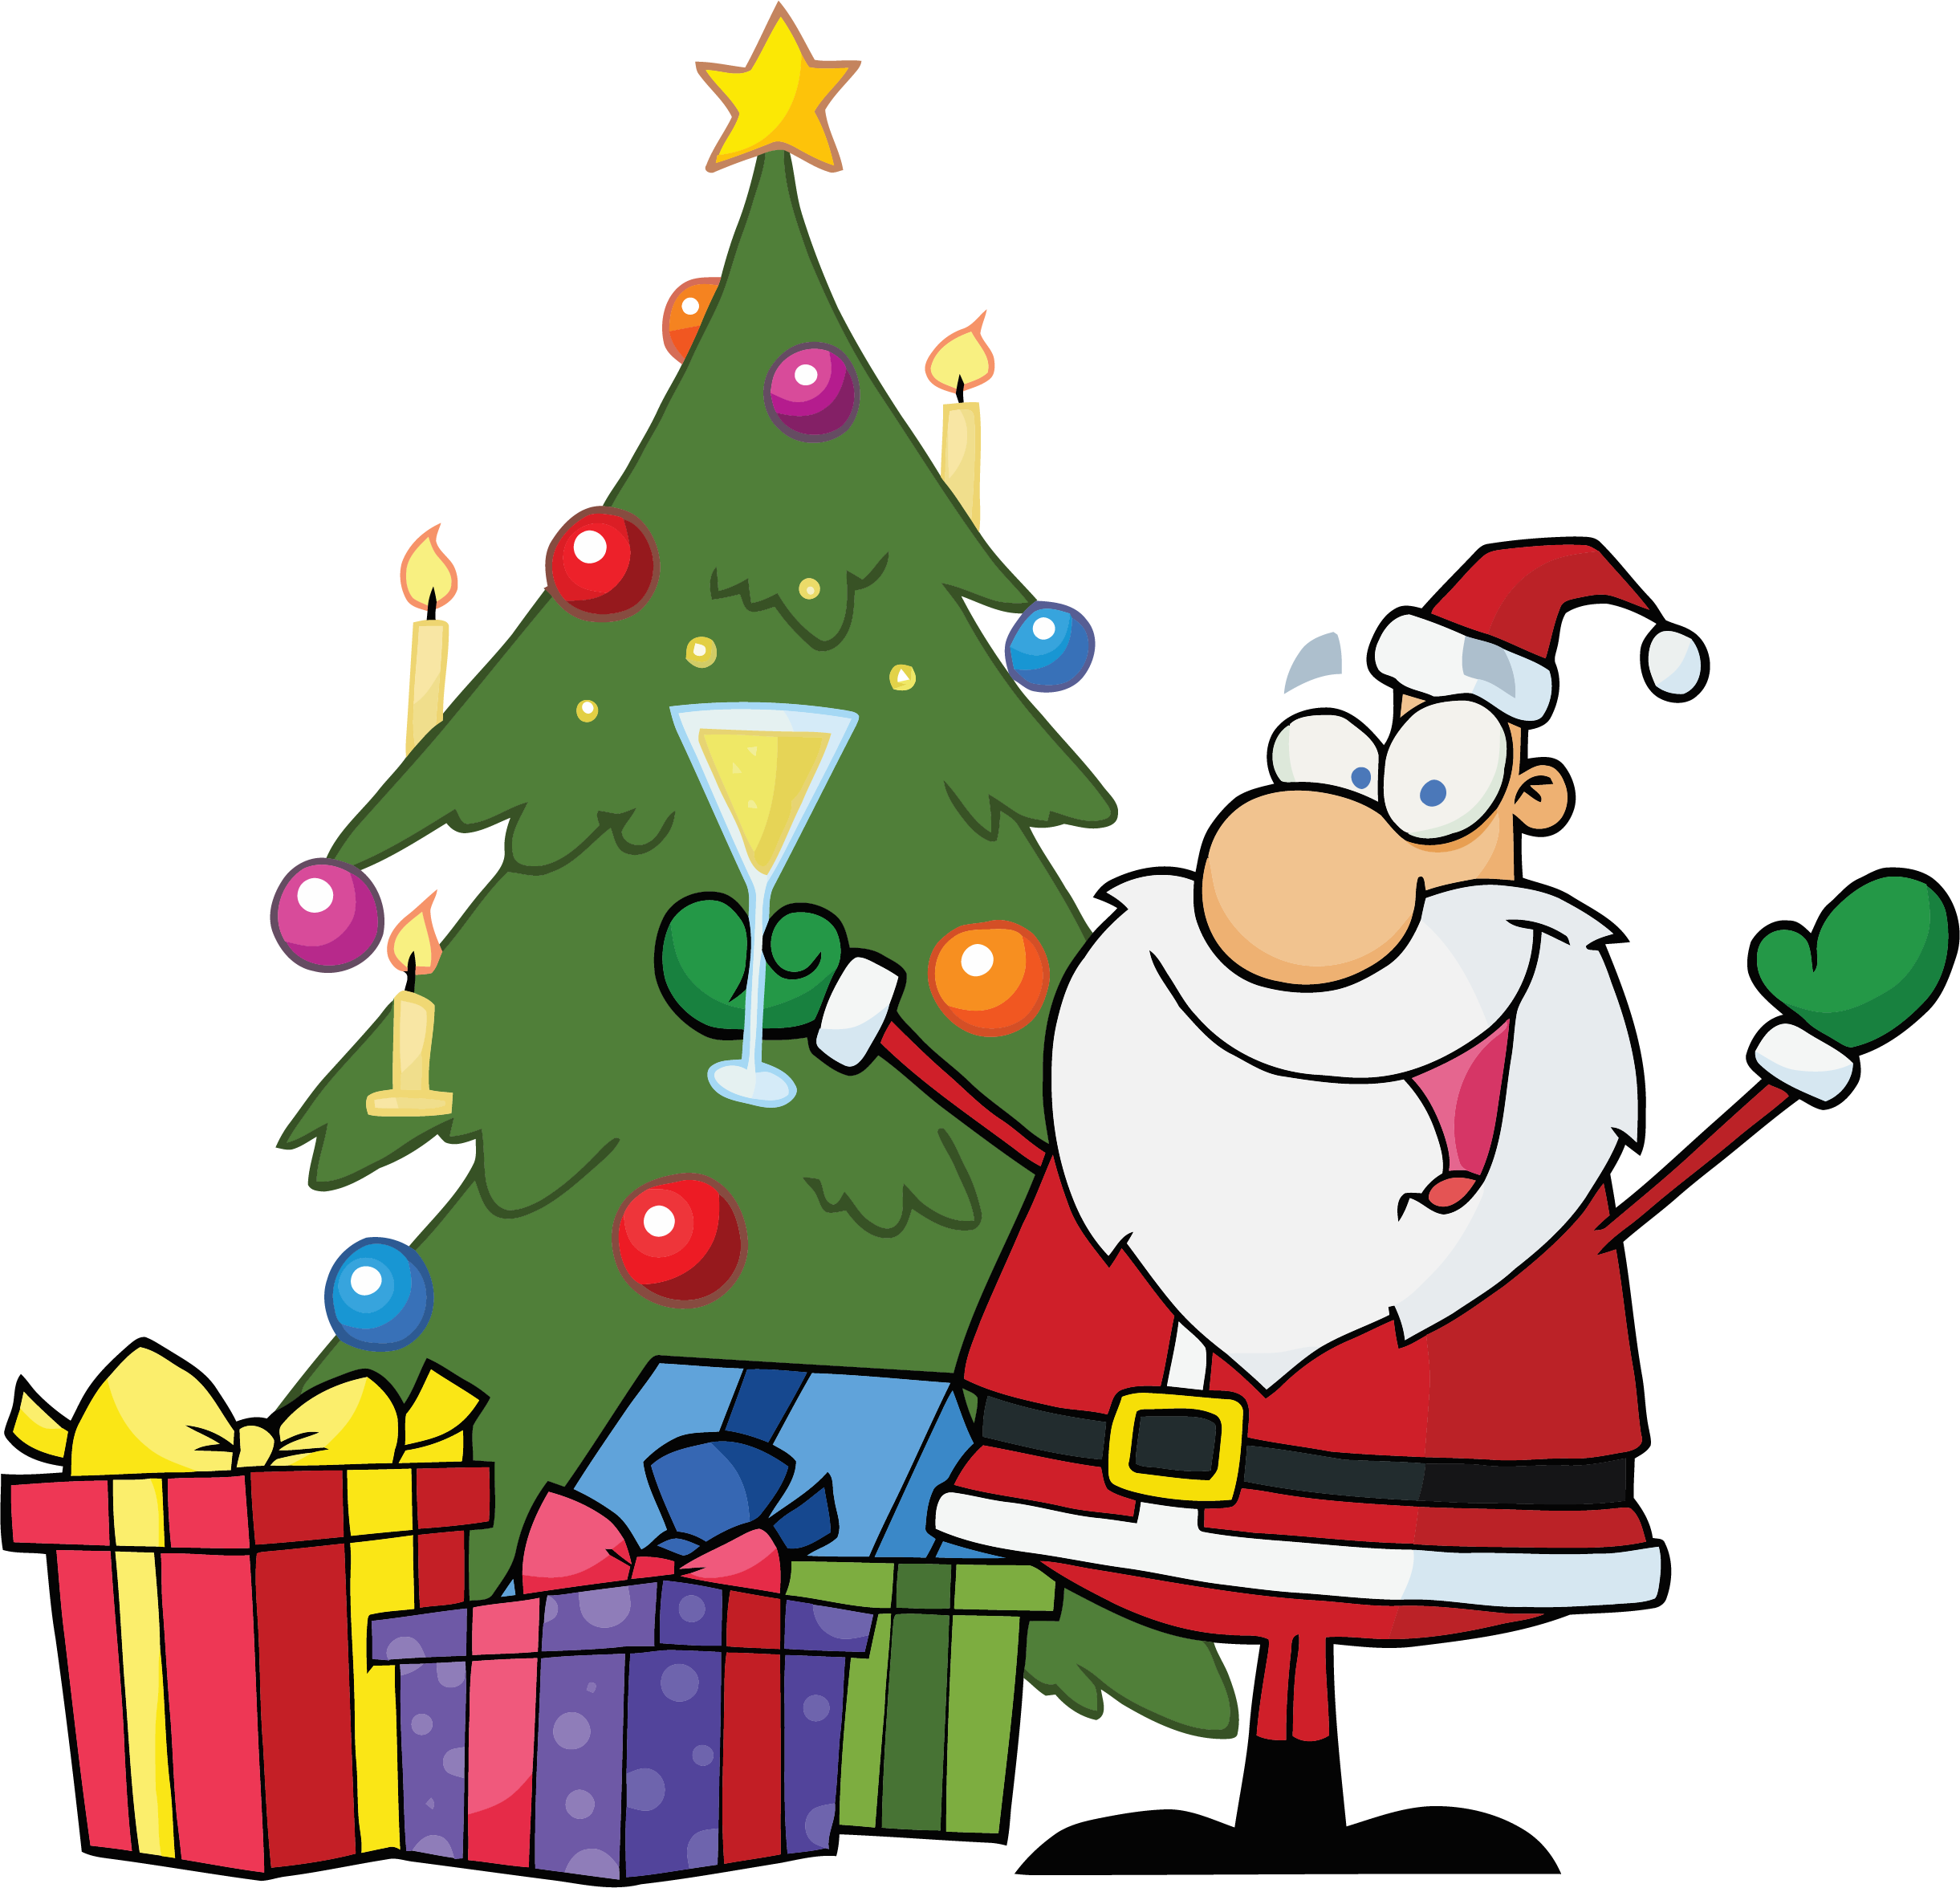 Cartoon Santa Claus With Presents Next To A Christmas Tree